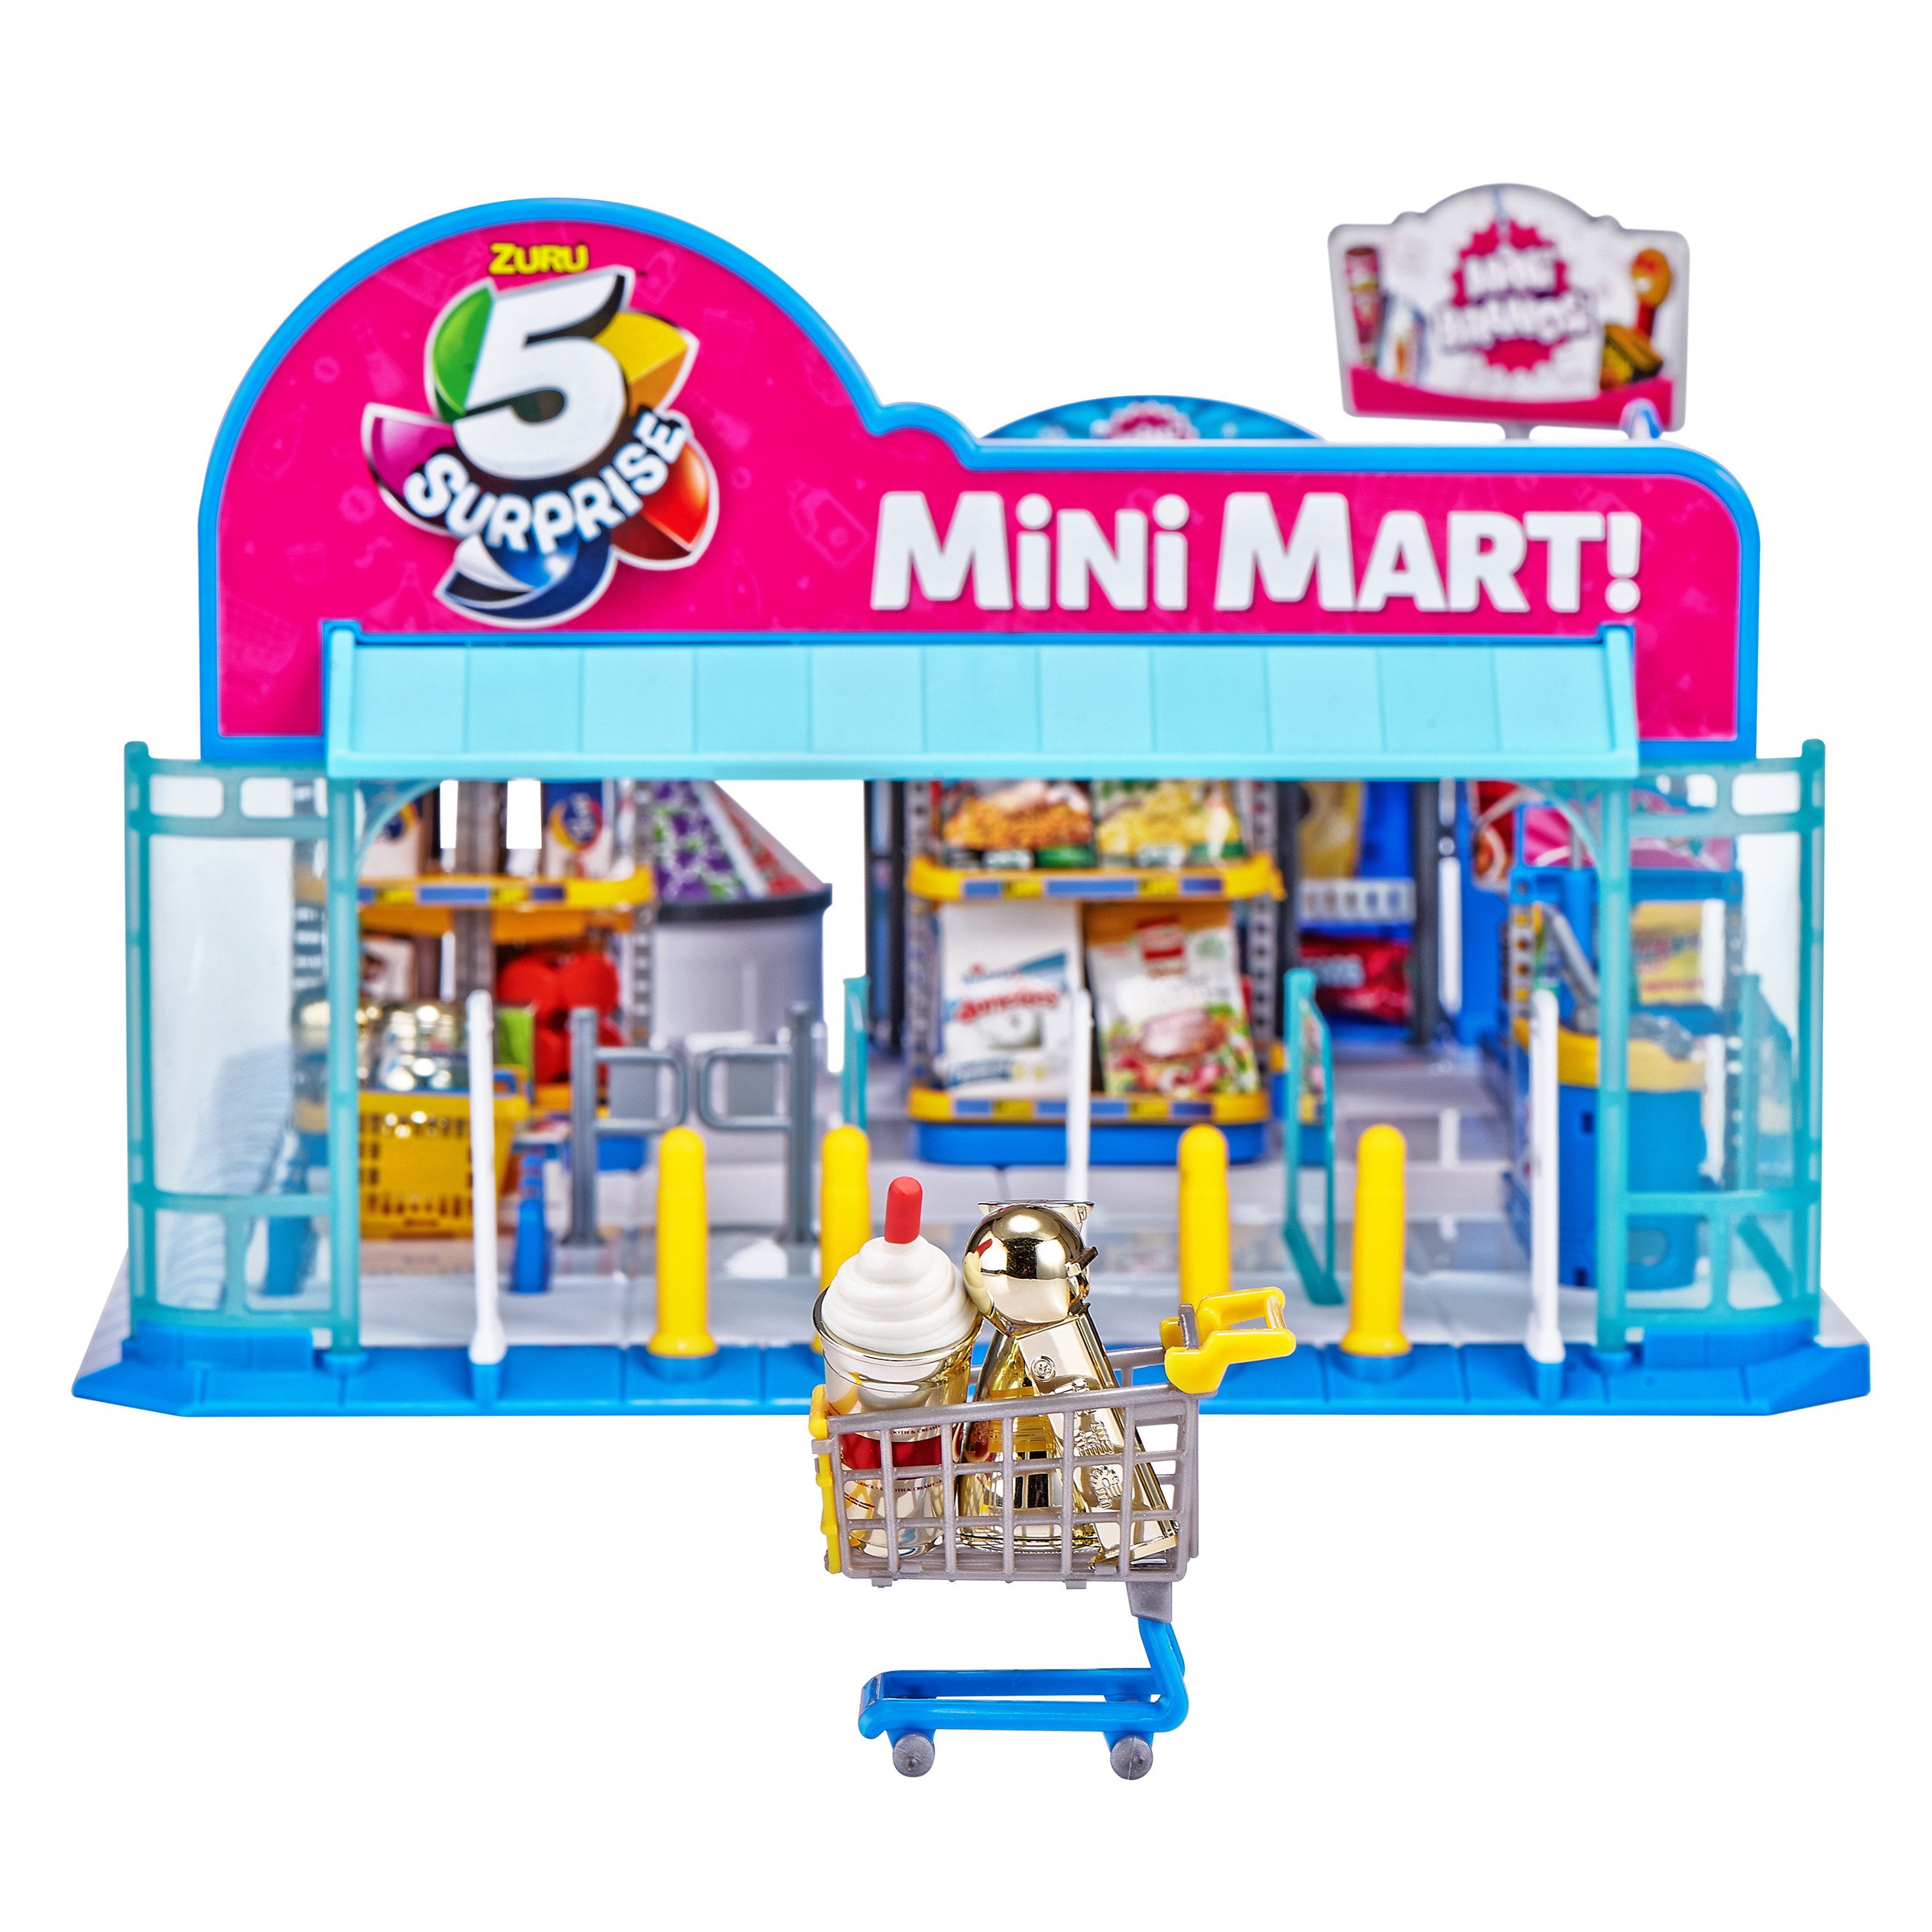 5 Surprise Mini Brands Mini Mart Playset